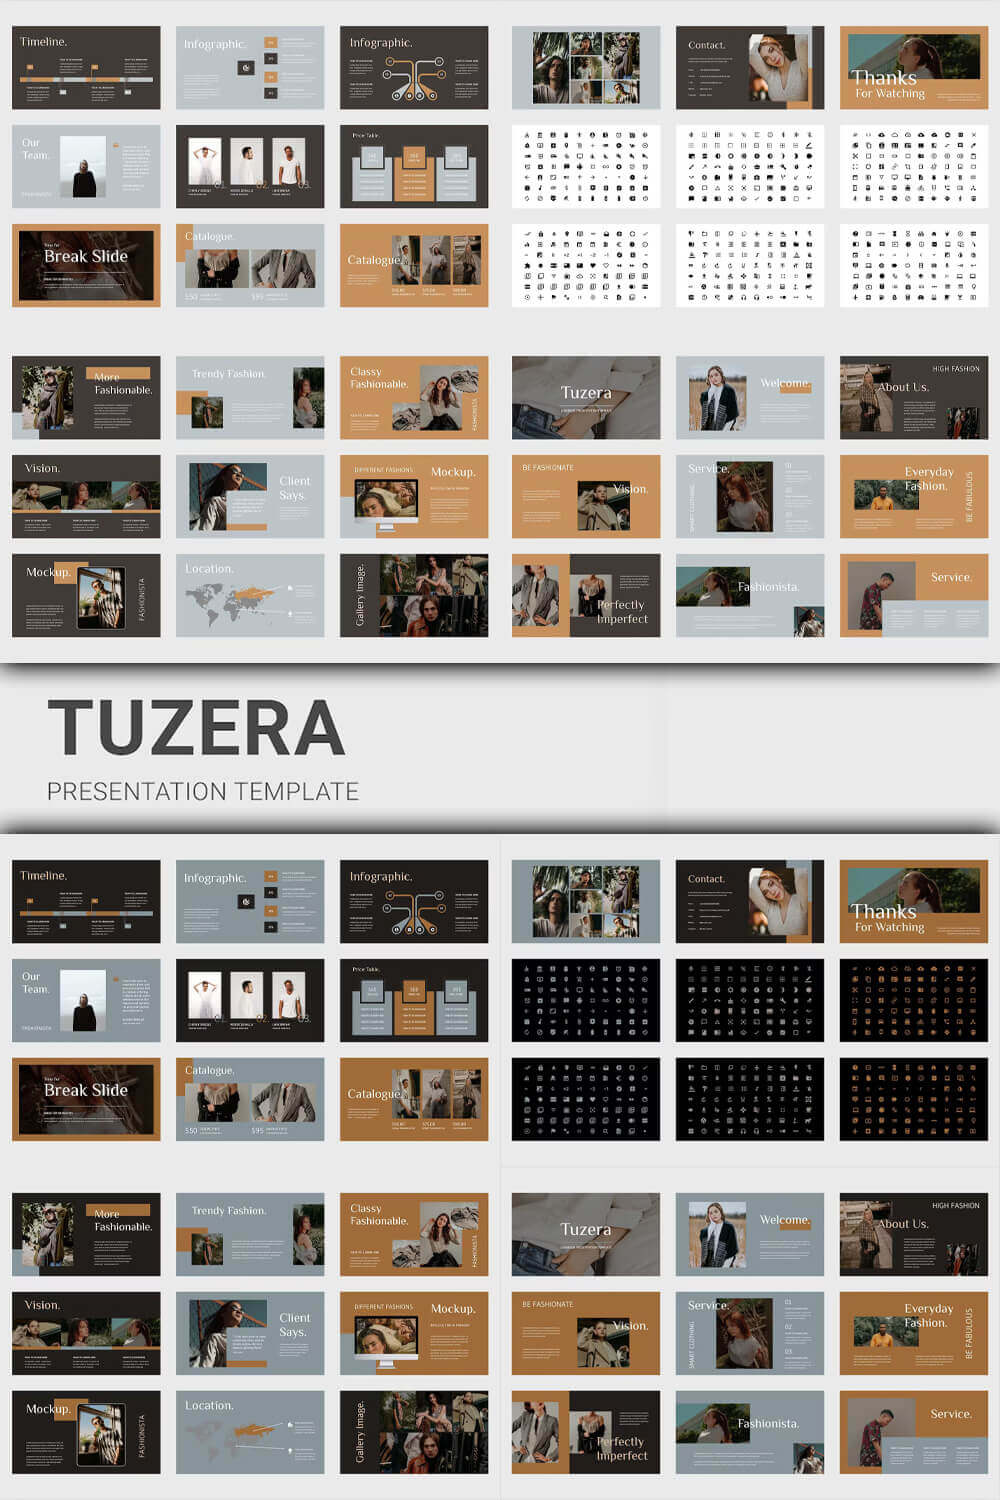 Catalogue of Tuzera Presentation Template.